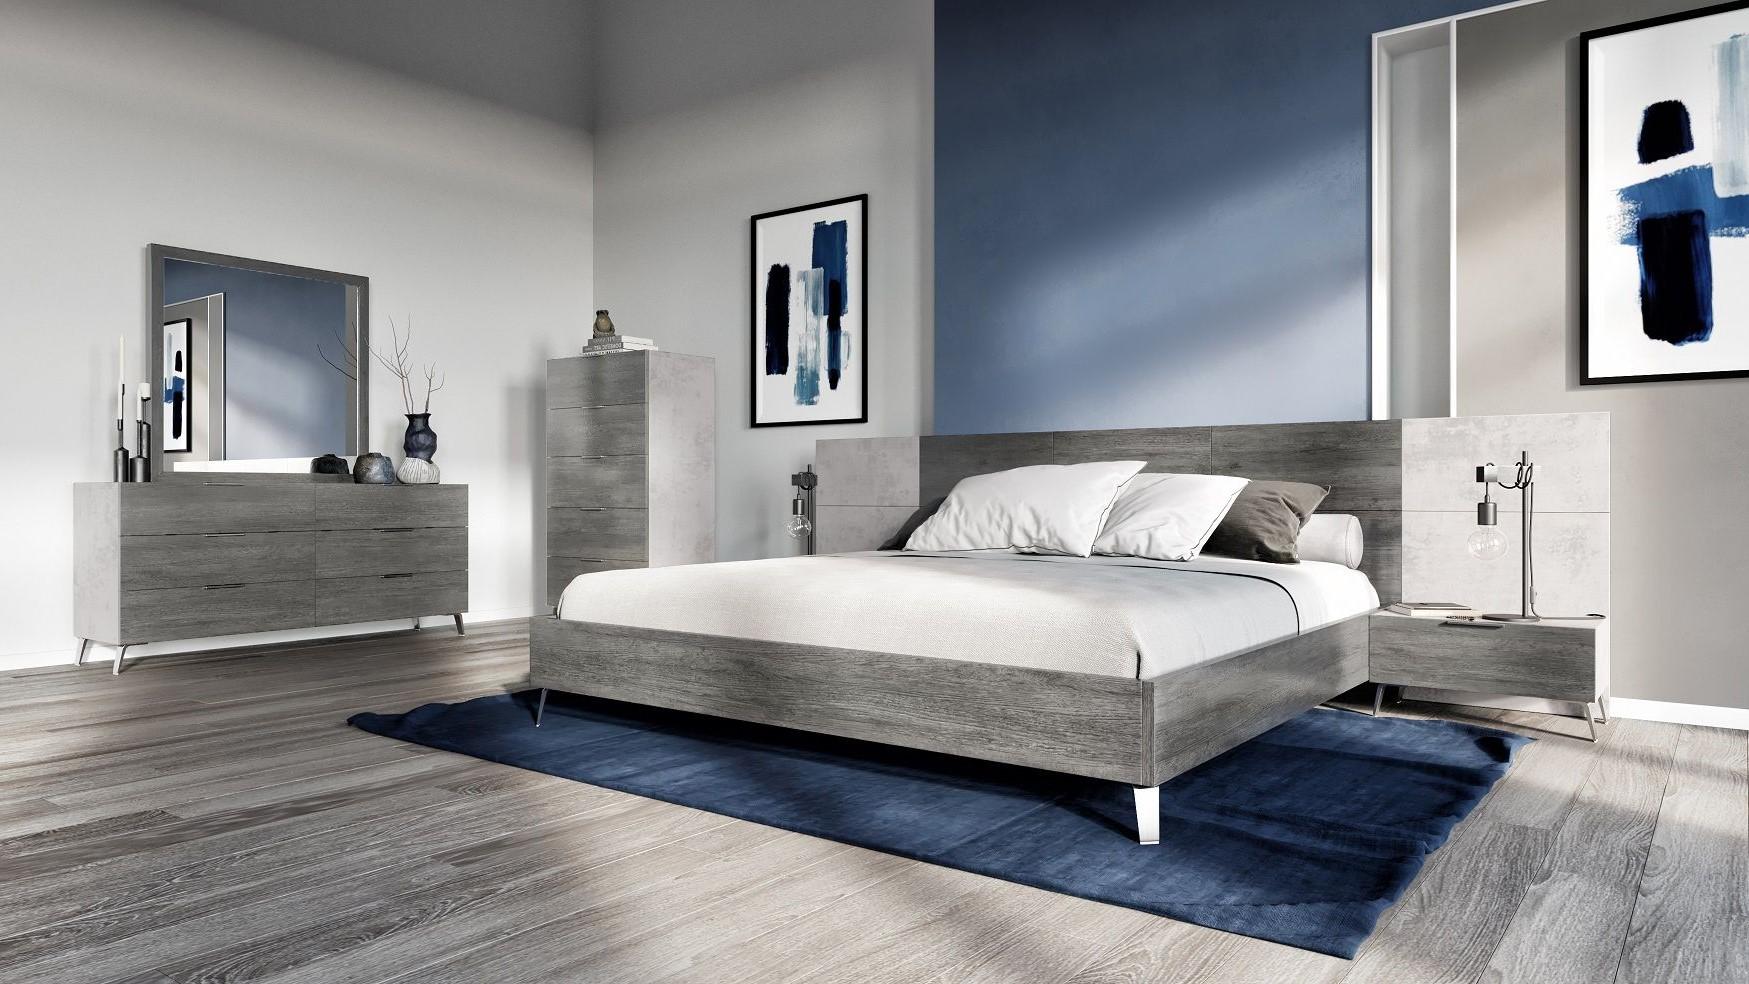 

    
VGACBRONX-SET-Q-6pcs Faux Concrete & Grey Bed Queen Panel Bedroom Set 5Pcs by VIG Nova Domus Bronx
